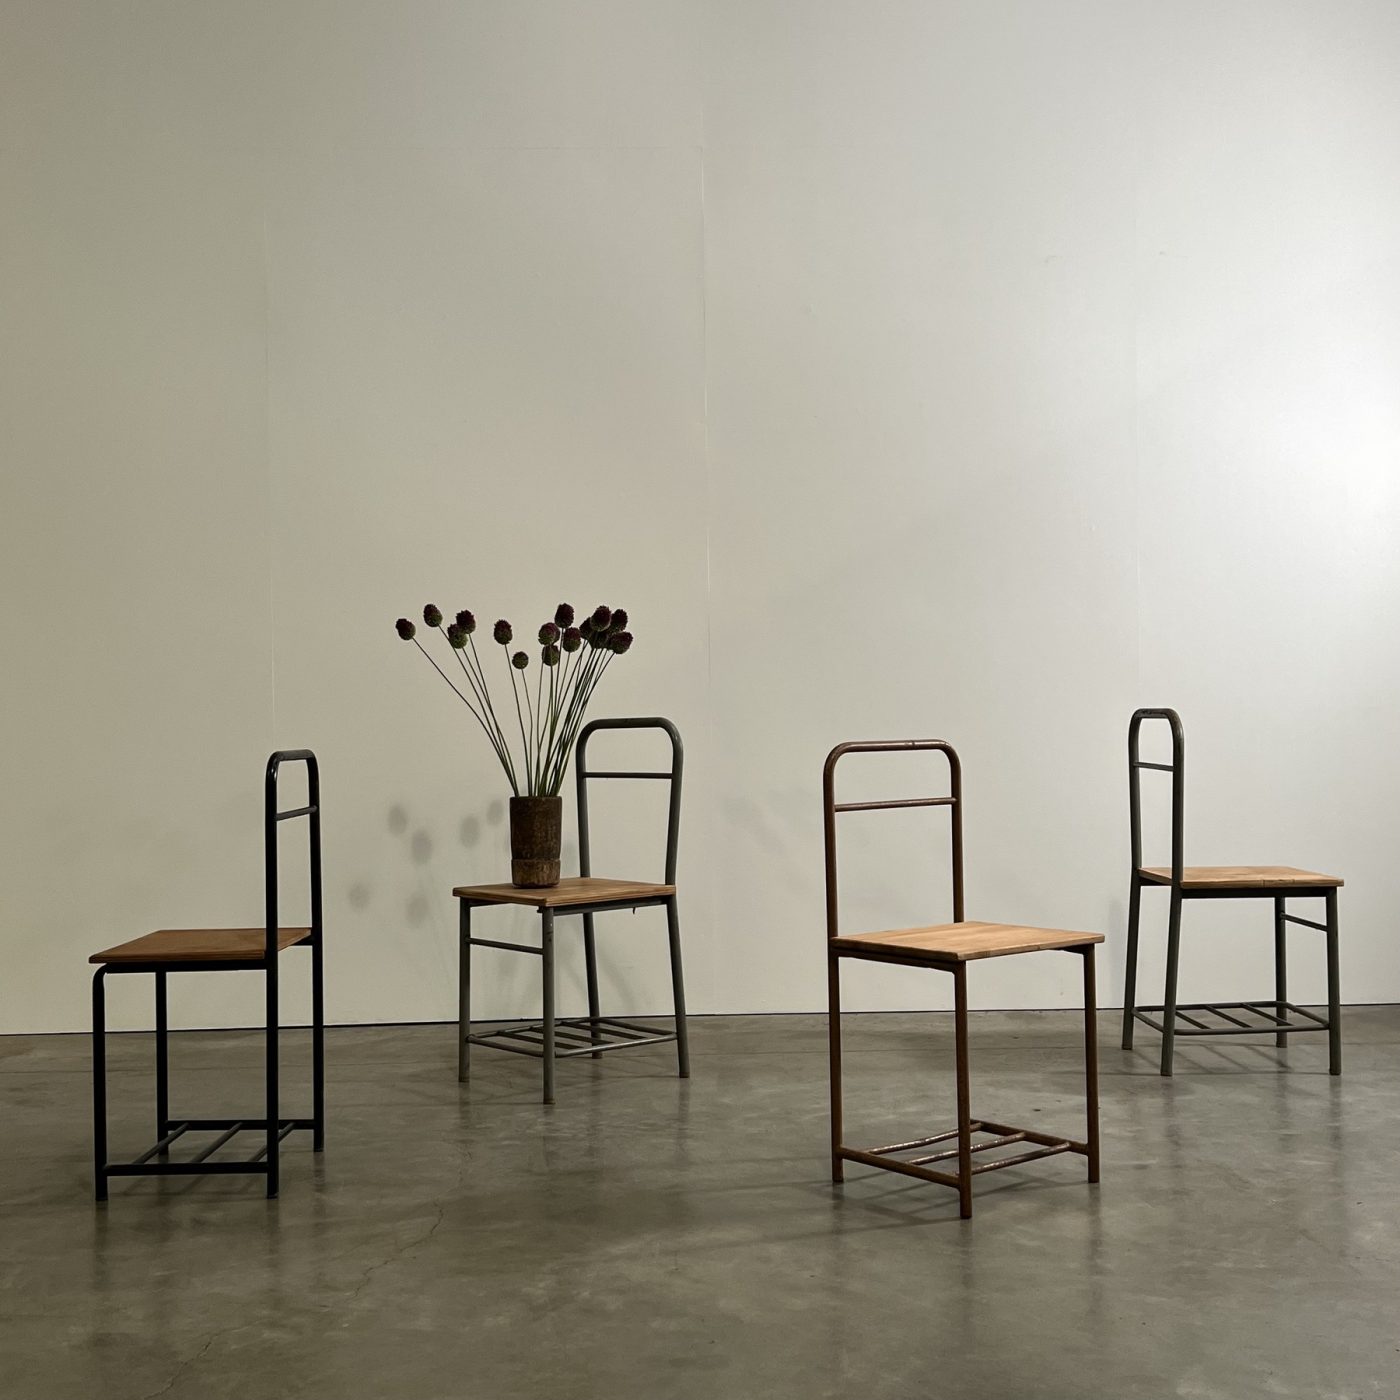 objet-vagabond-metal-chairs0001